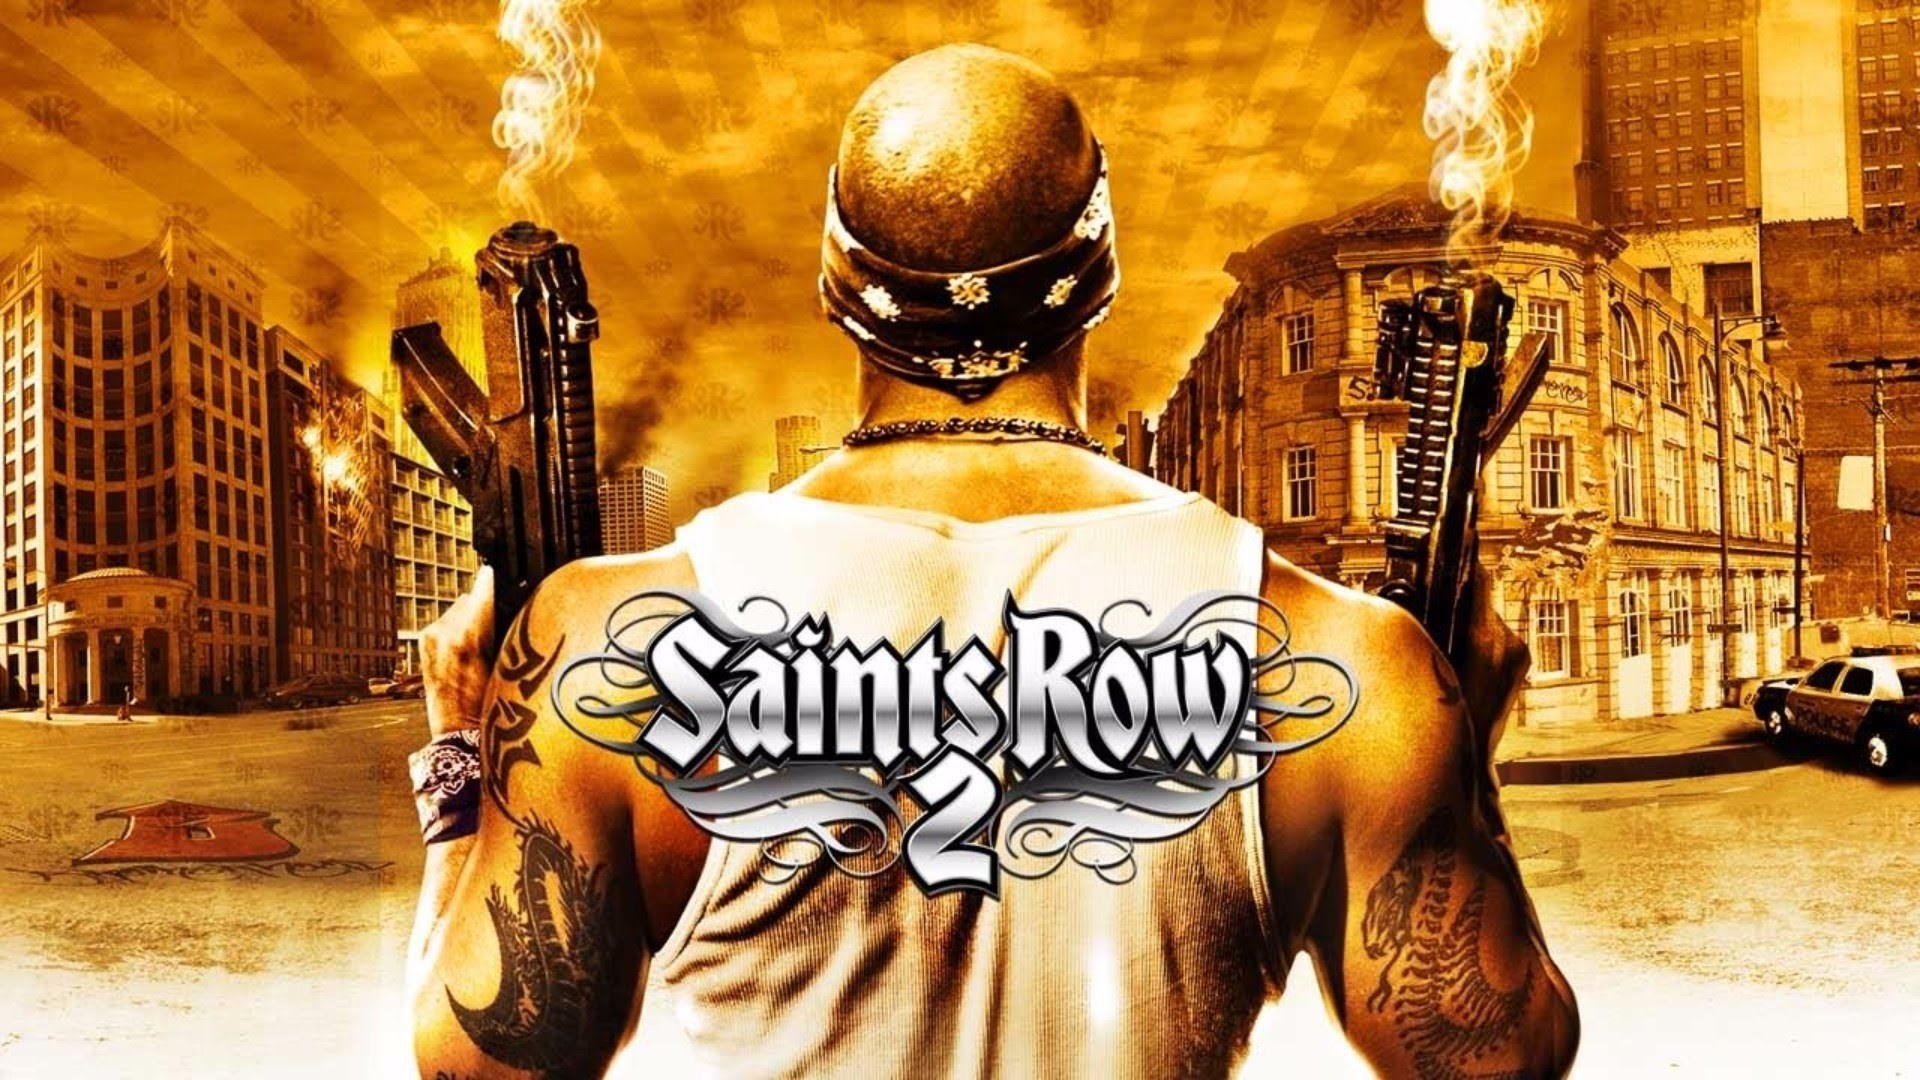 Made Big Smoke in Saints Row 2. : r/SaintsRow